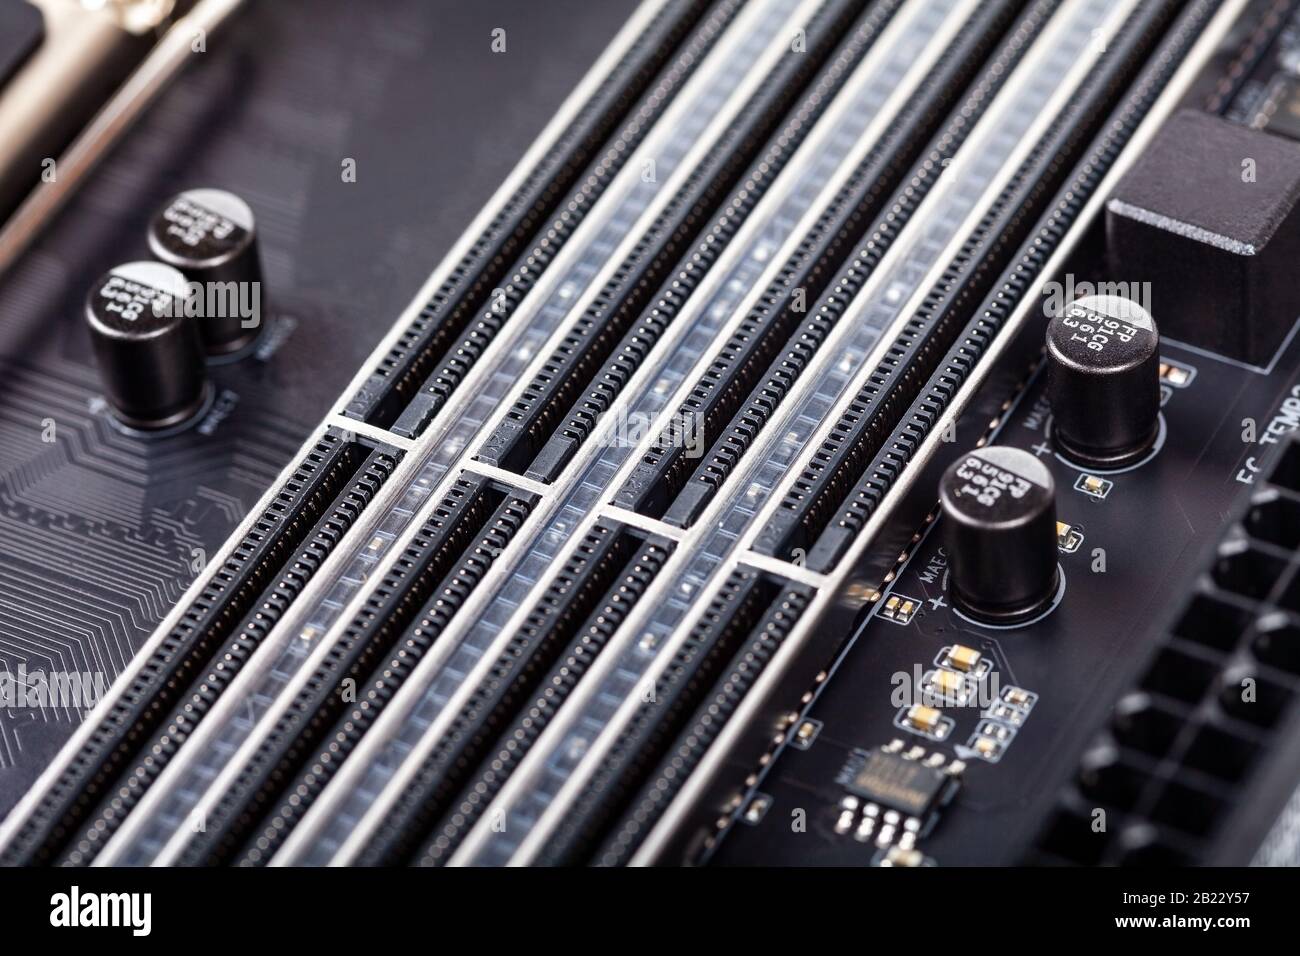 Closeup on empty RAM slots on a modern black silver motherboard. Ddr4, ddr5 random access memory stick slots, ram placing order. Macro electronics Stock Photo